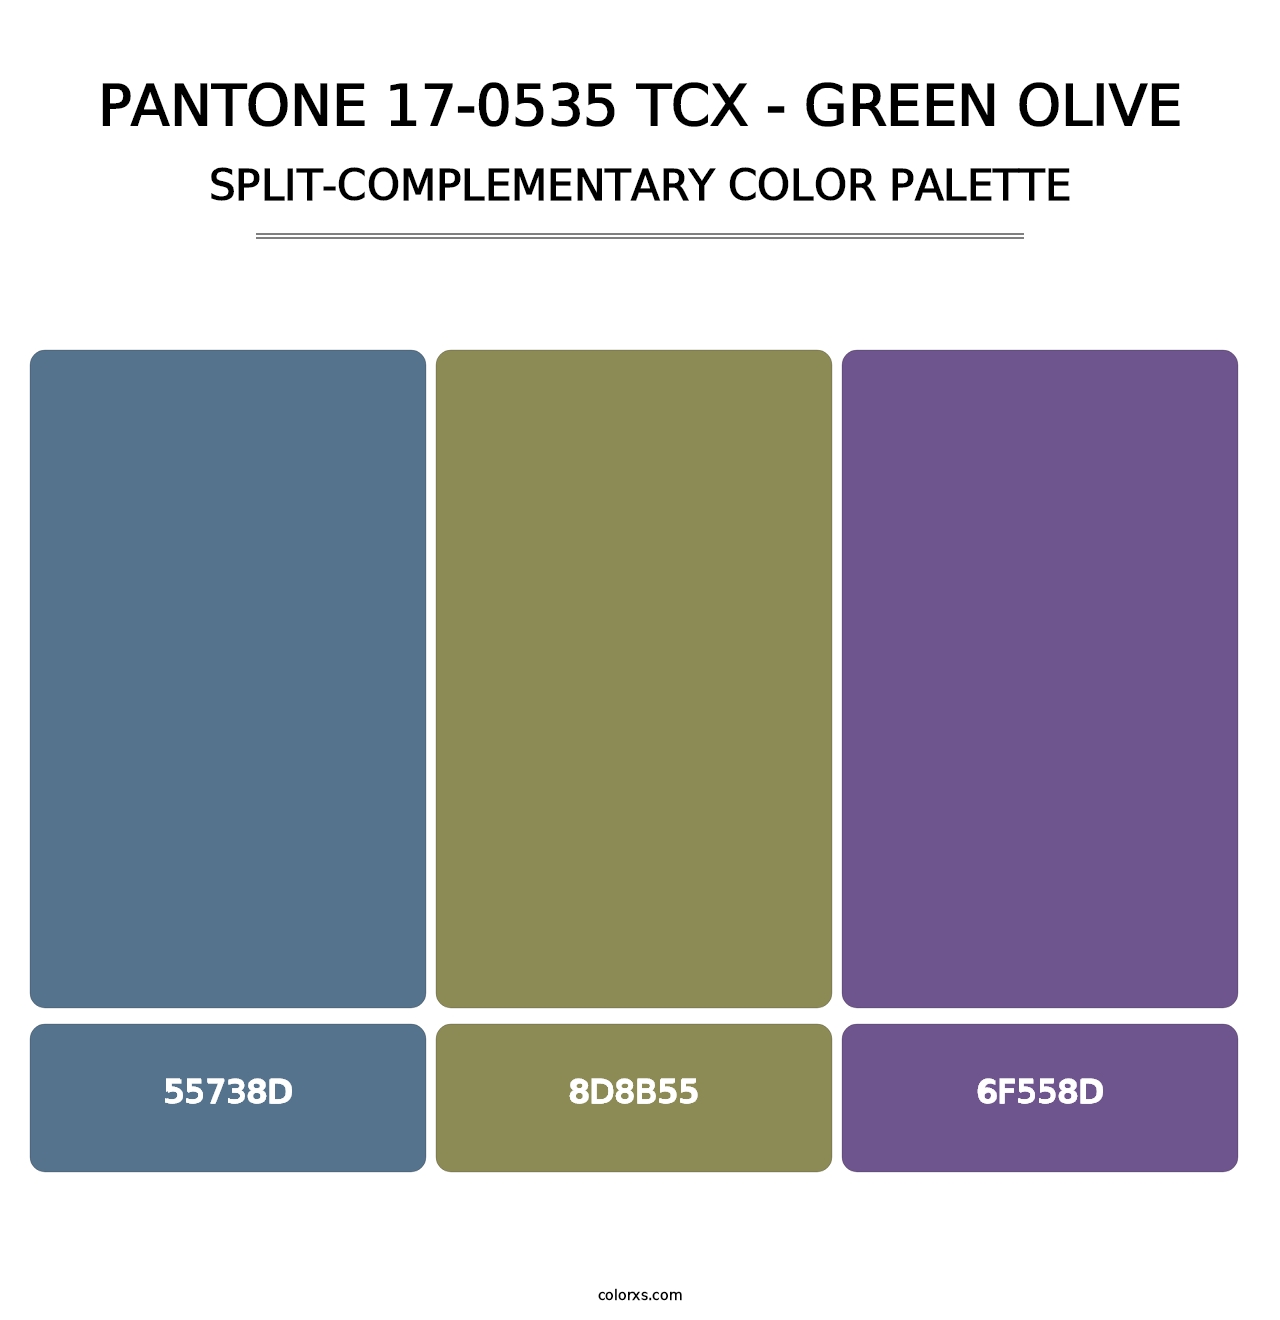 PANTONE 17-0535 TCX - Green Olive - Split-Complementary Color Palette